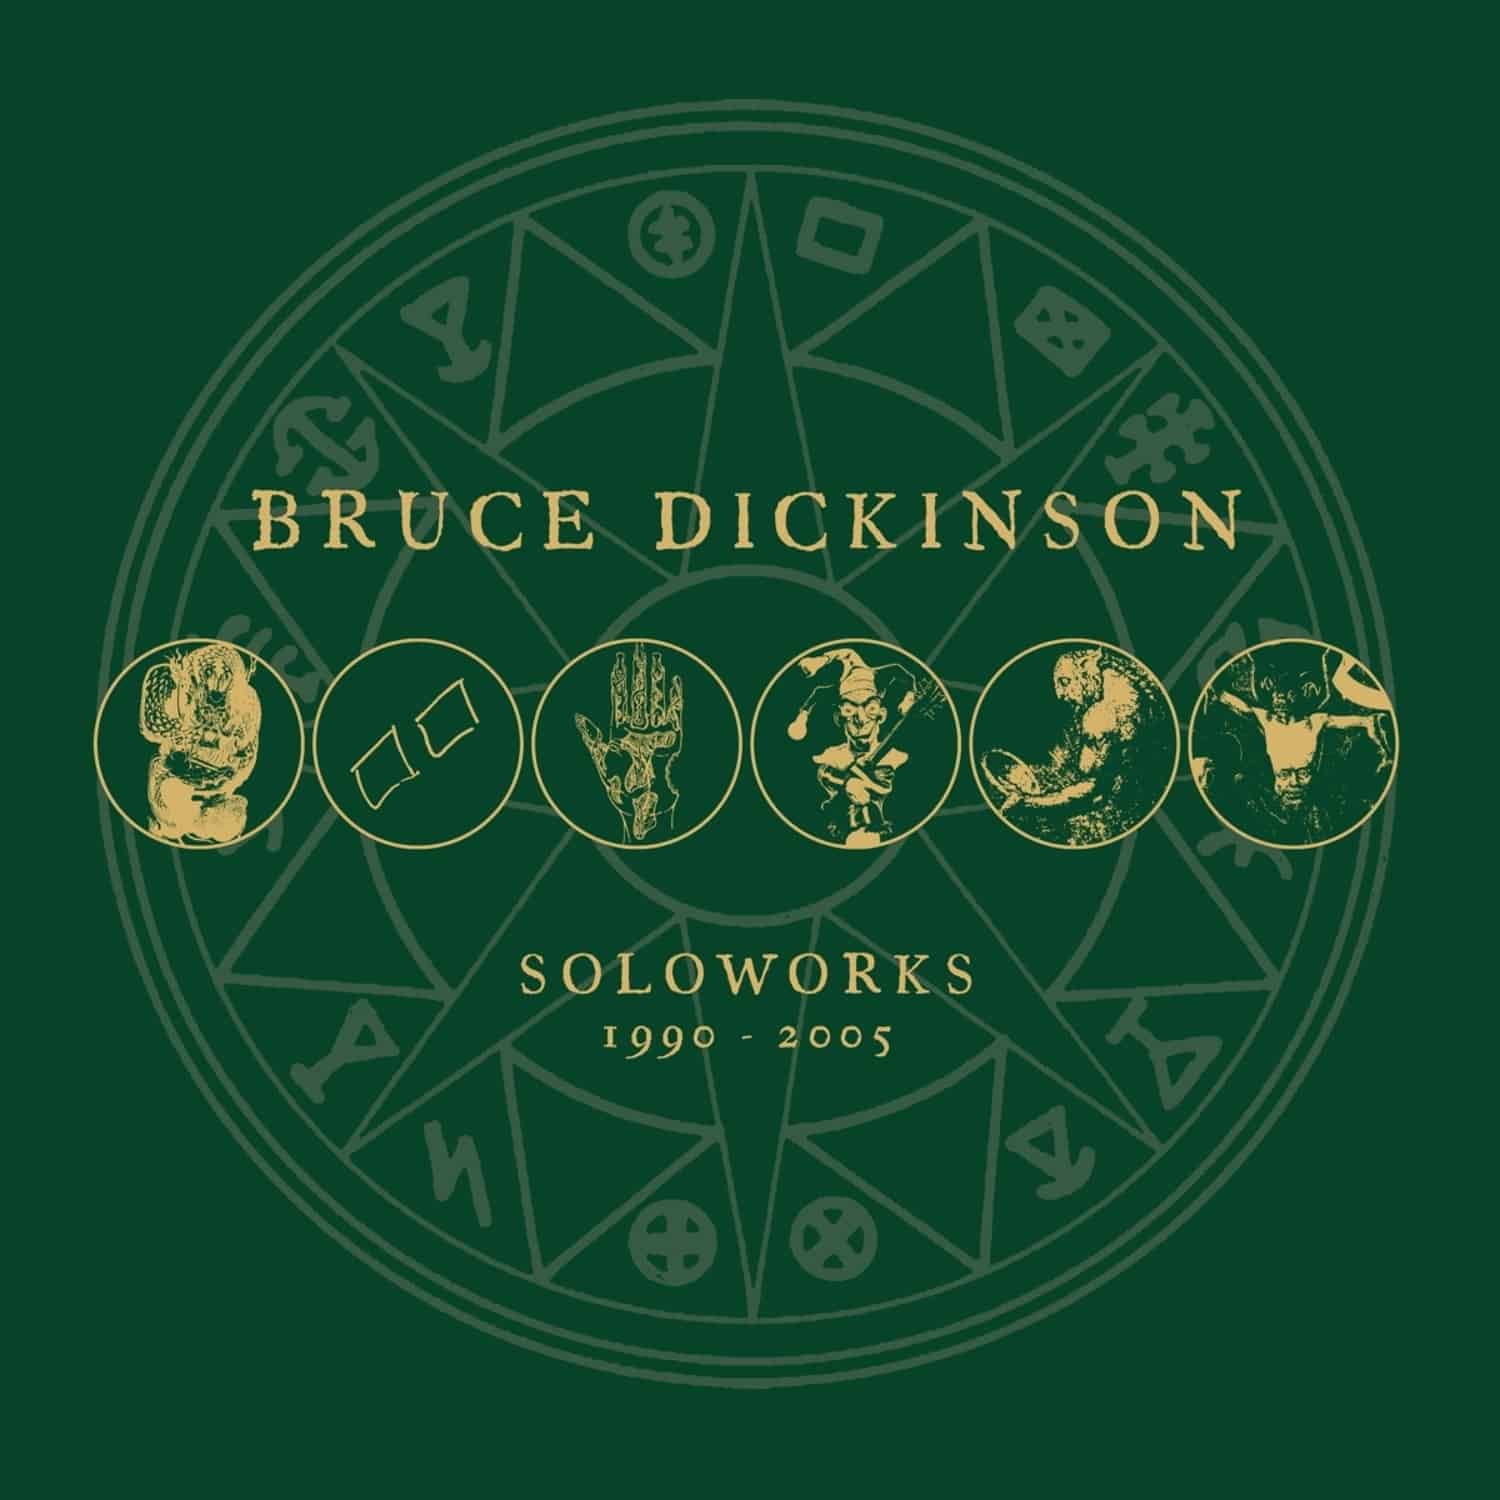 Bruce Dickinson - BRUCE DICKINSON-SOLOWORKS 